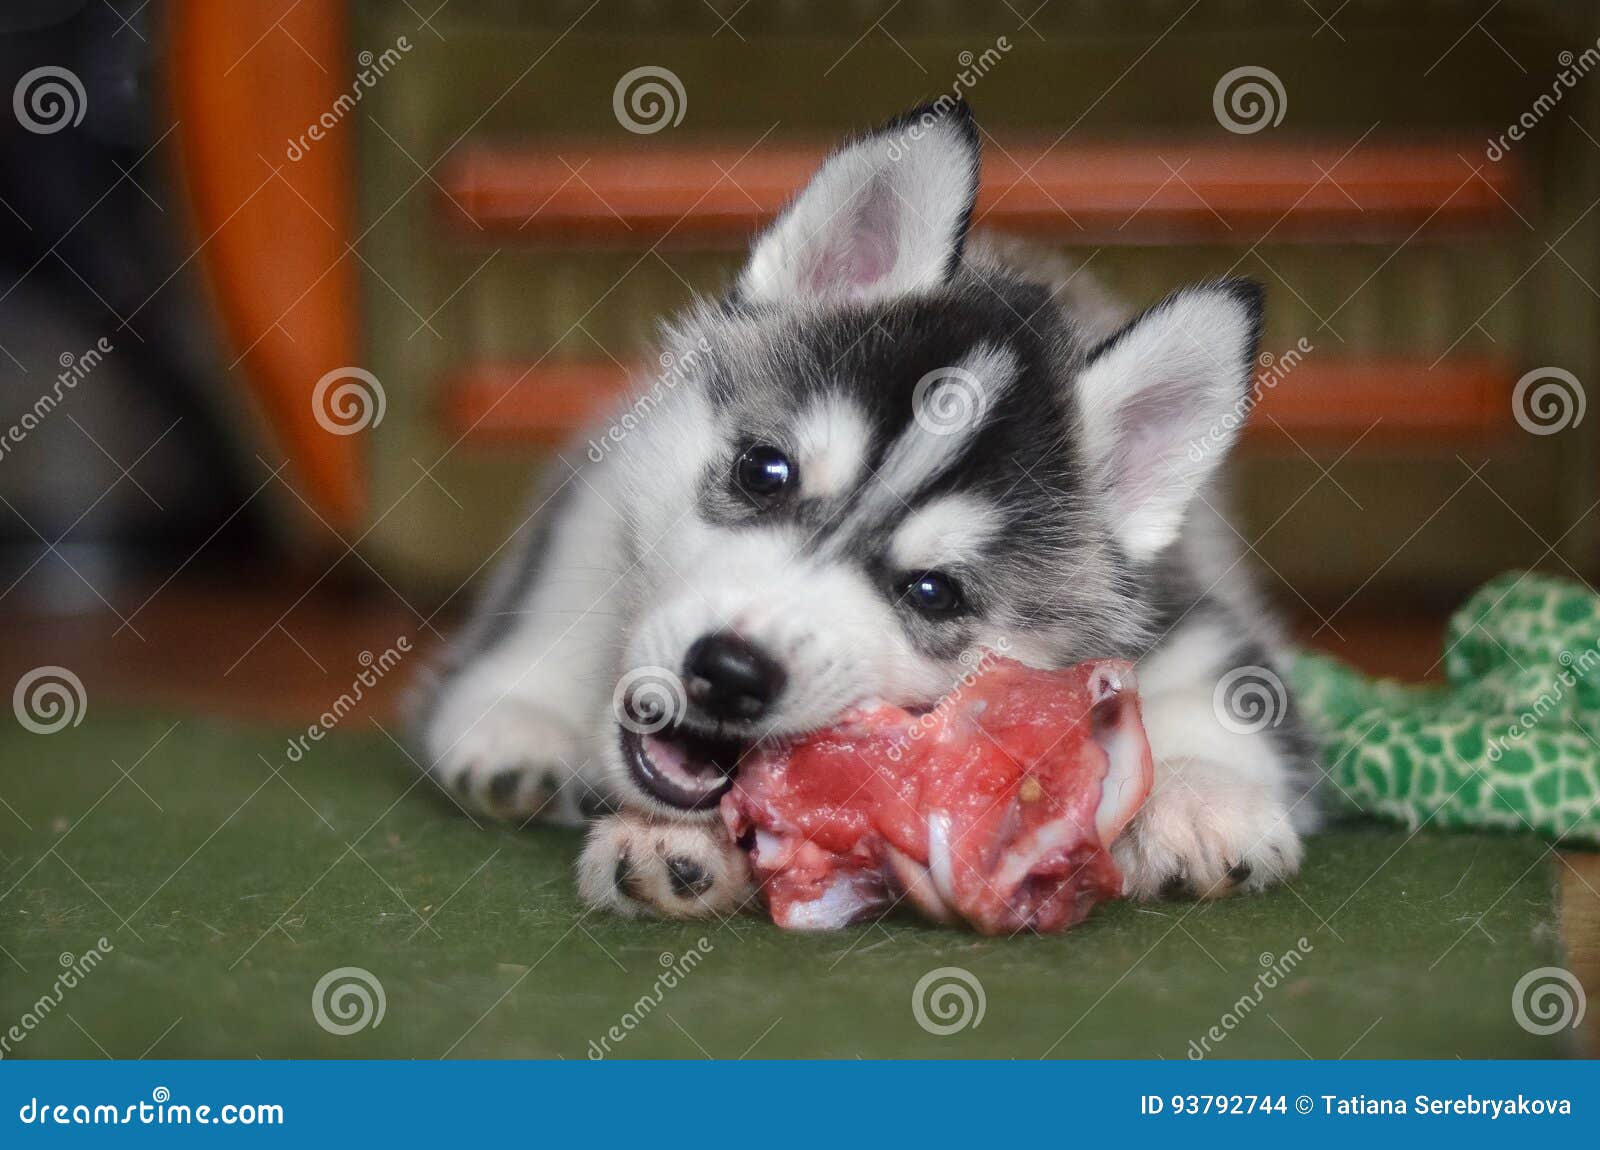 siberian husky dog puppy eating meat bone